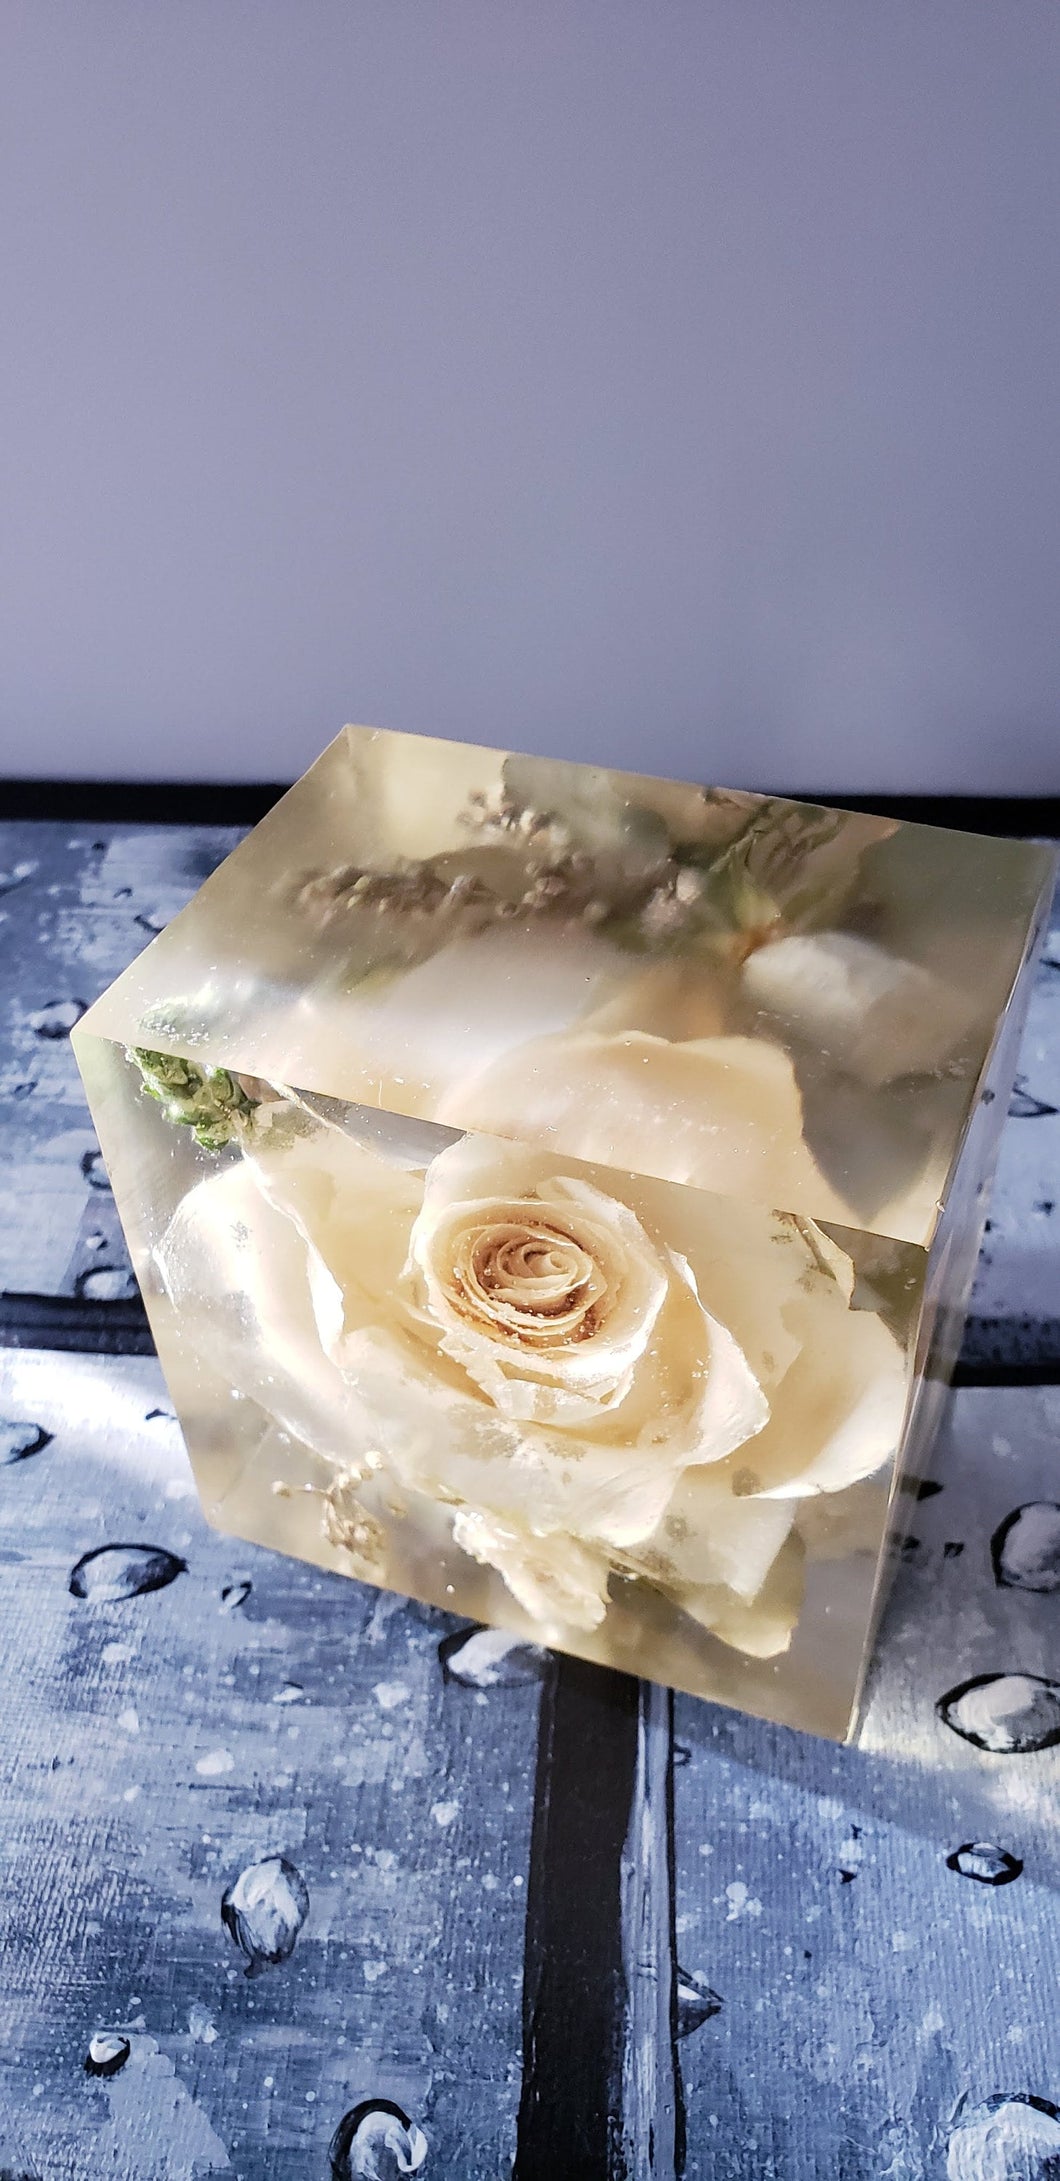 Flower Preservation in Resin Cube like glass Paperweight Keepsake Sweet romantic memories of your wedding, anniversary, funeral.